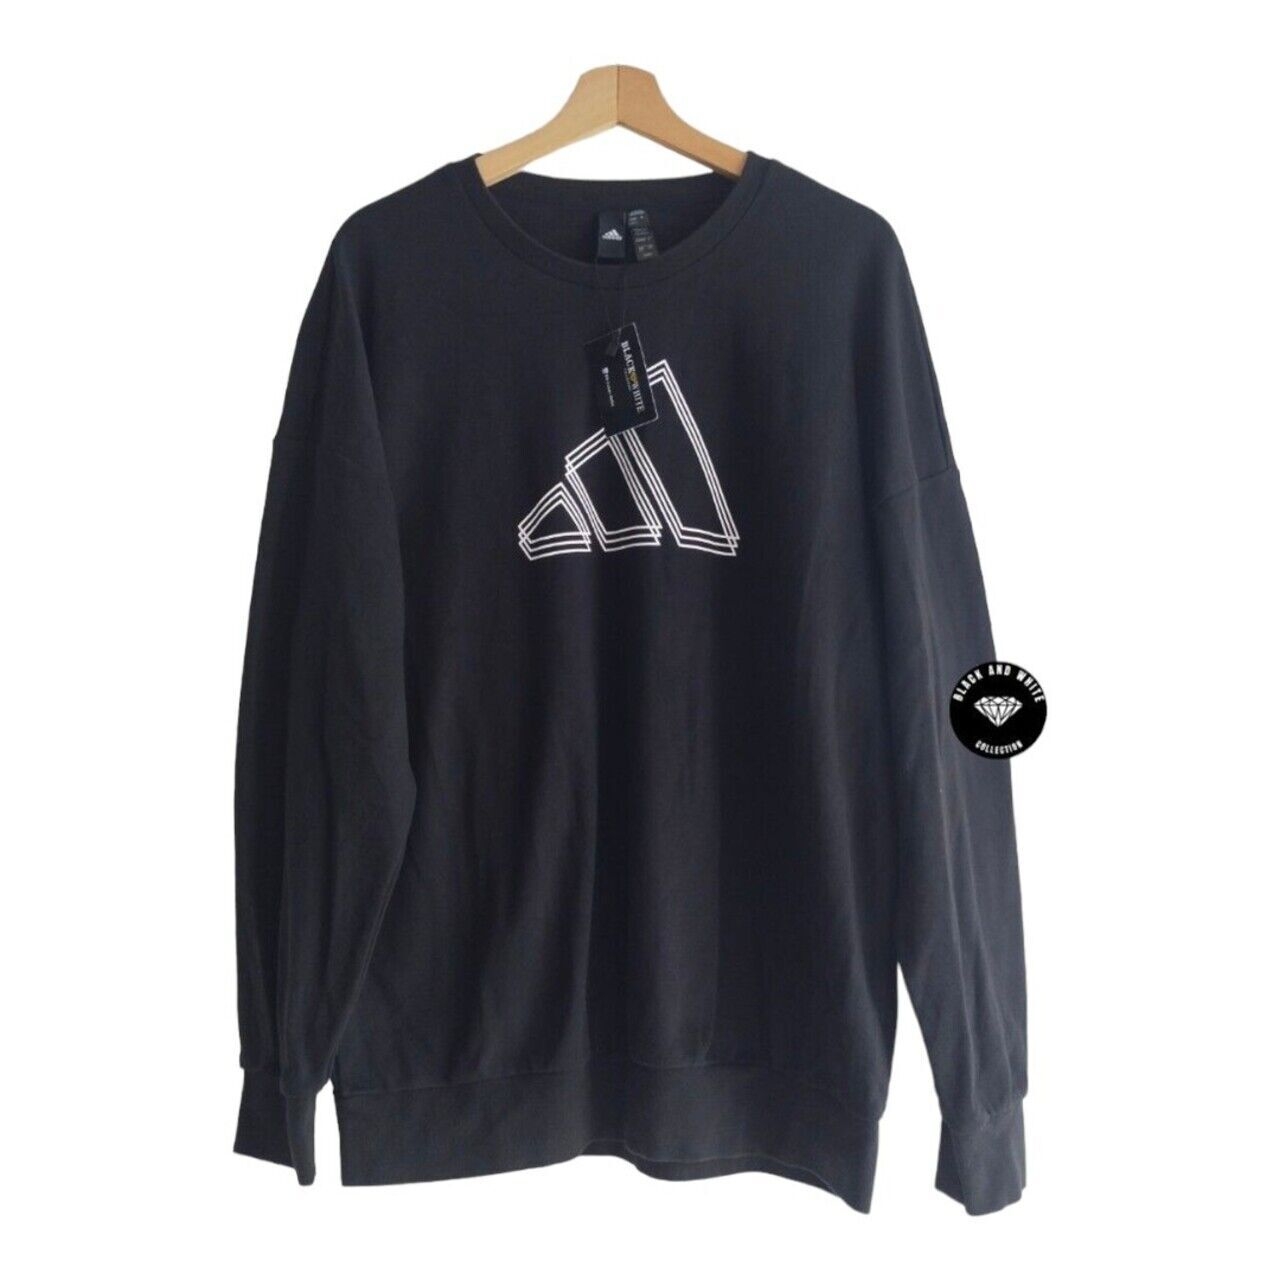 Adidas Black Sweater